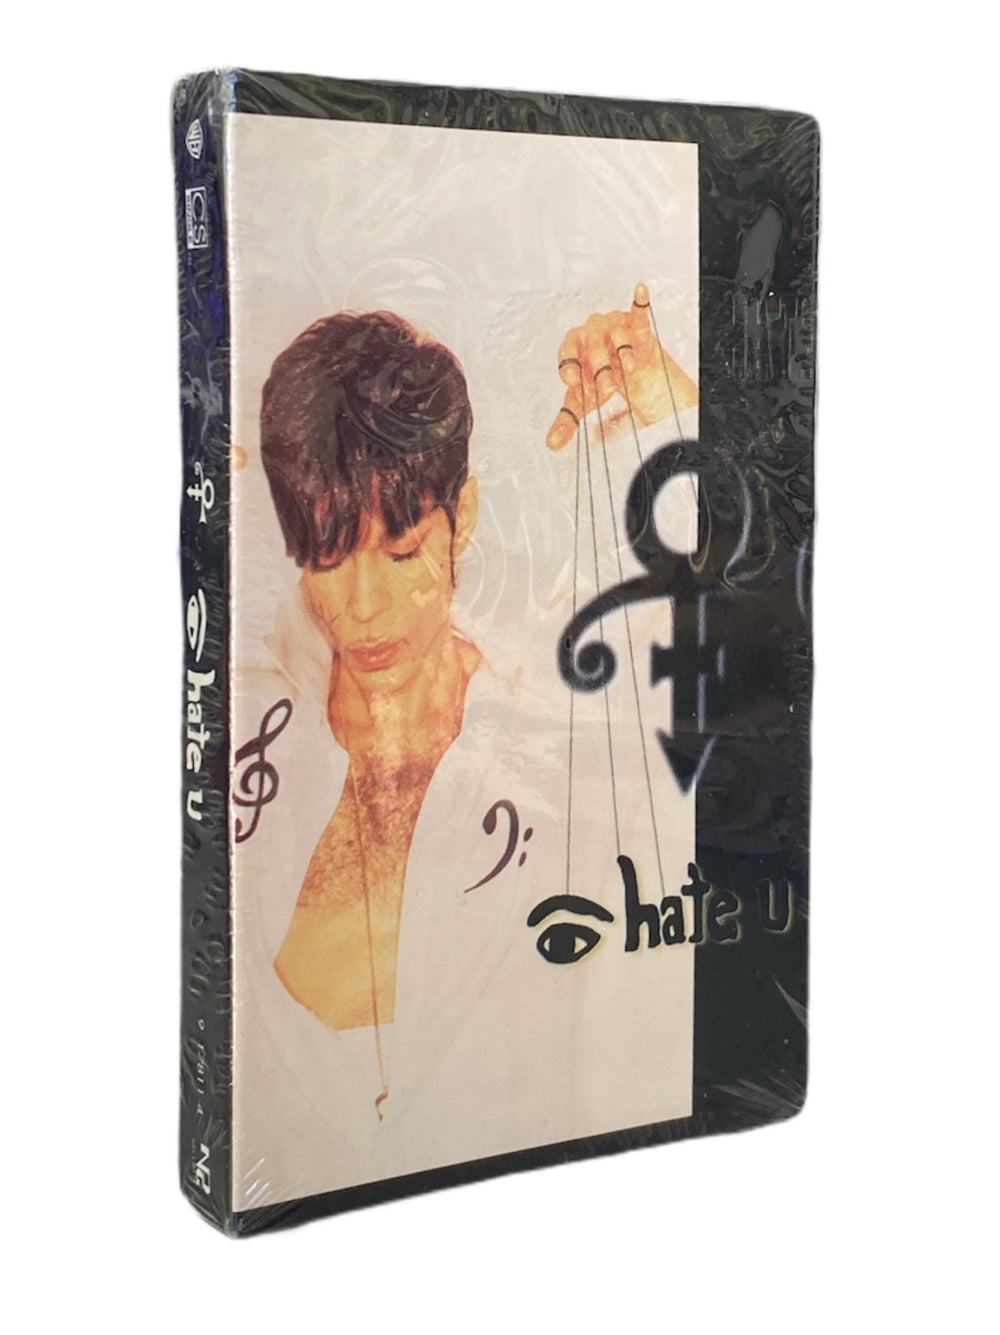 Prince O(+> Eye Hate U Original Single Cassette Tape USA Release Sealed